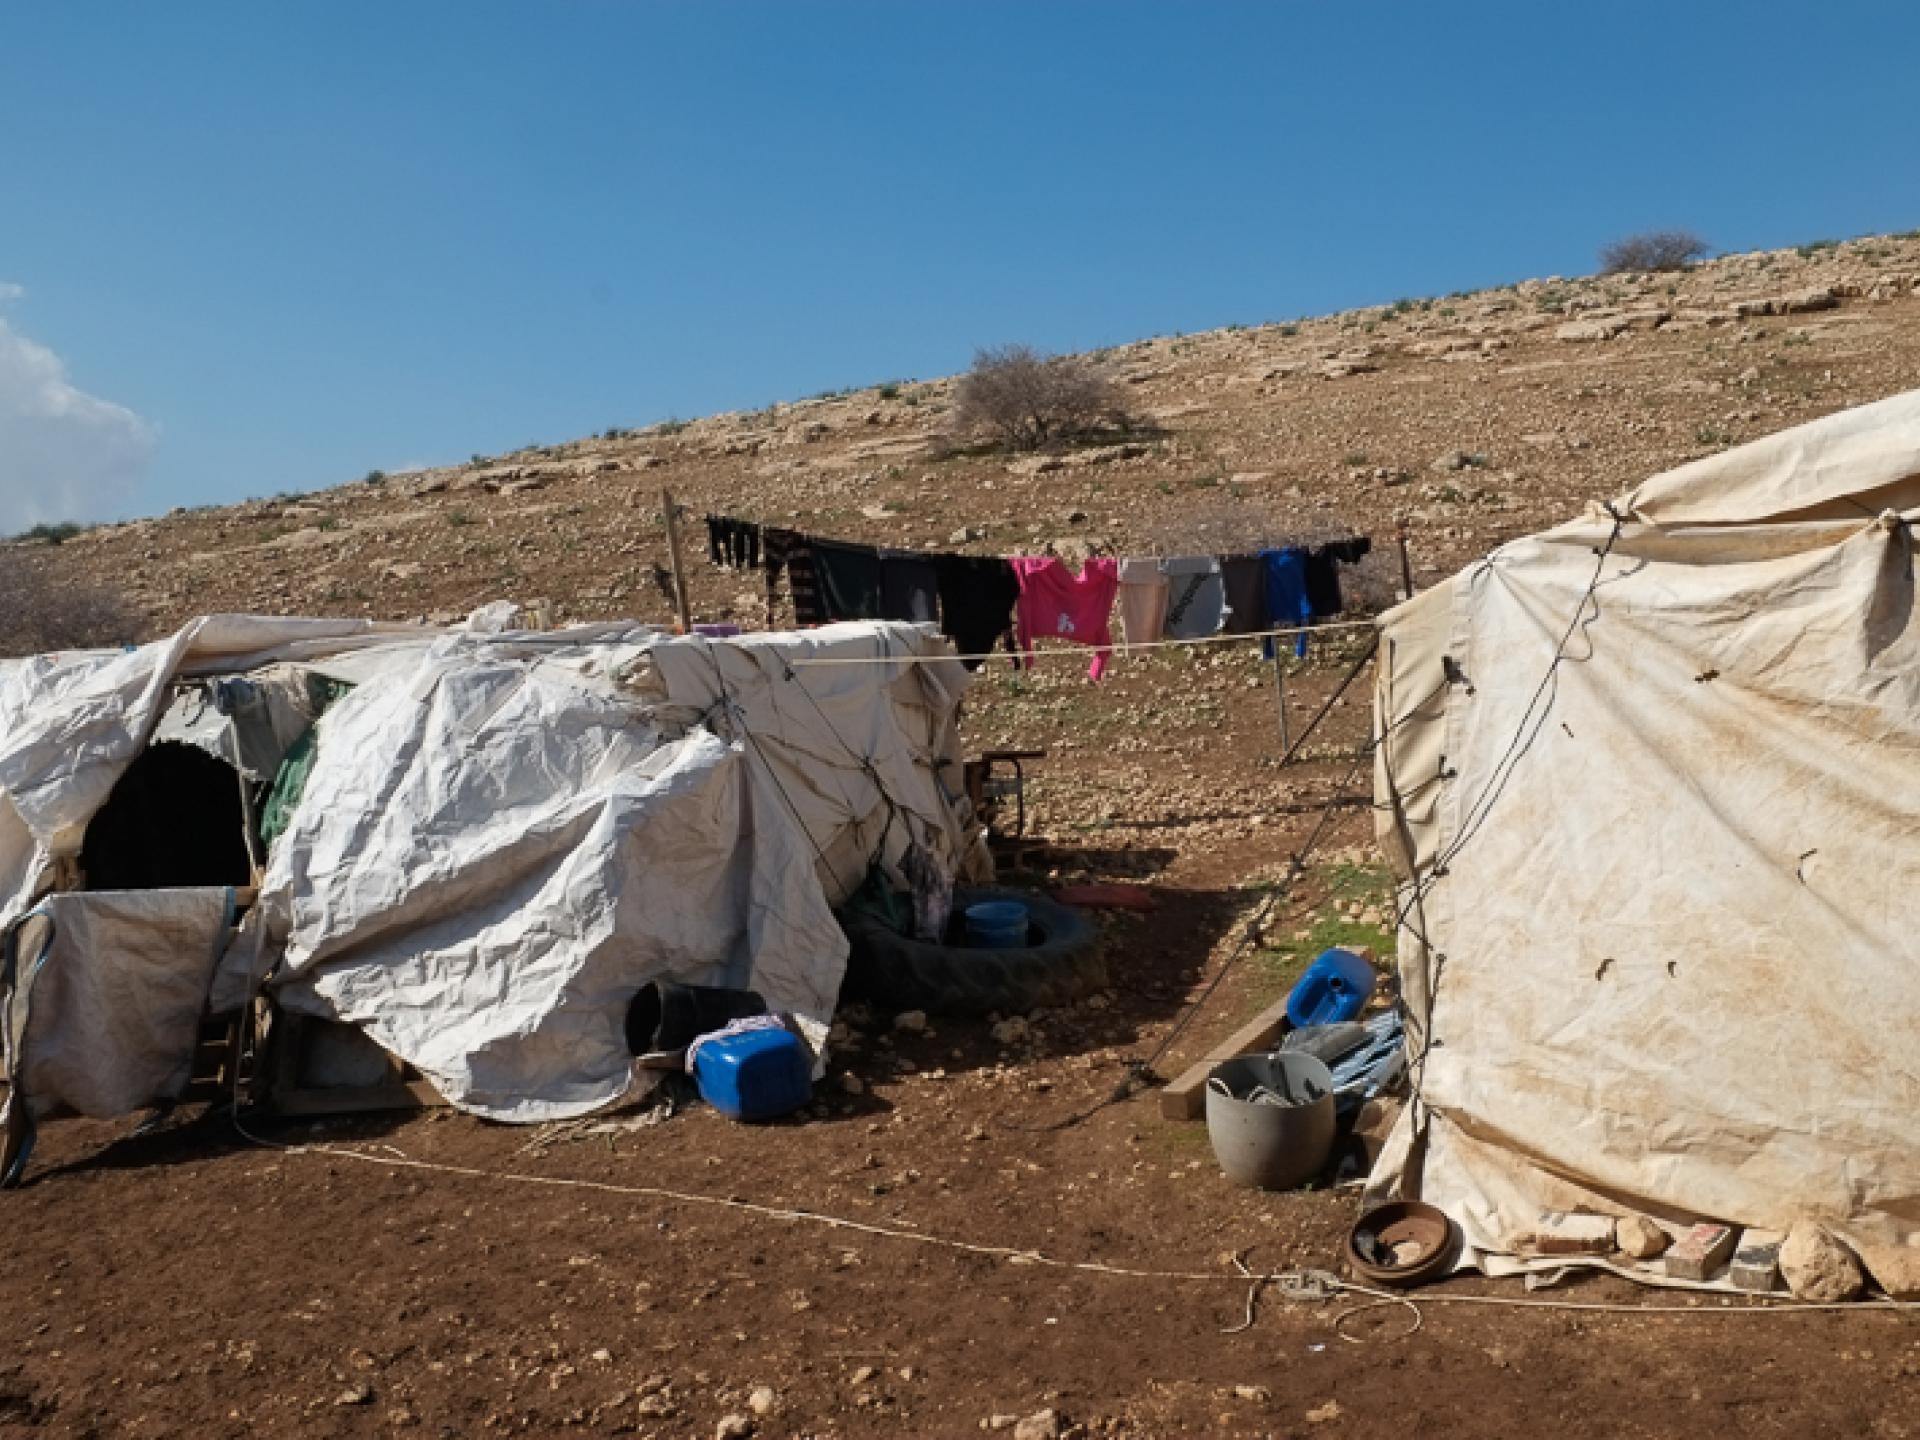 encampment residential of shepherds in the Jordan Valley